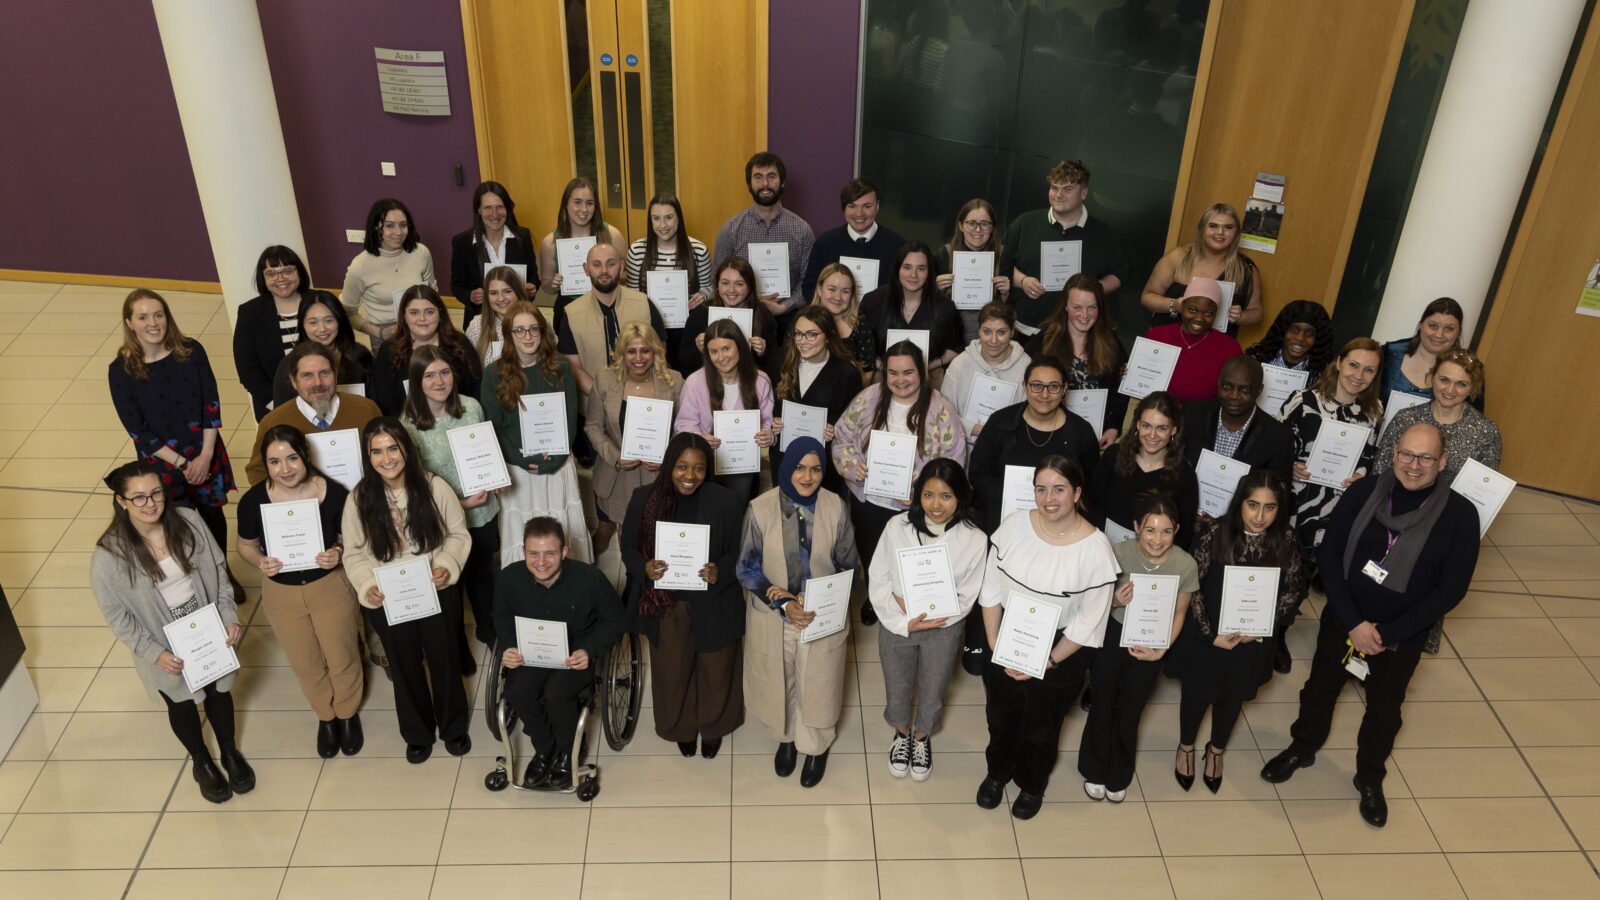 BP Student Tutoring Scheme celebrates 30 years of inspiring pupils across North-east Scotland